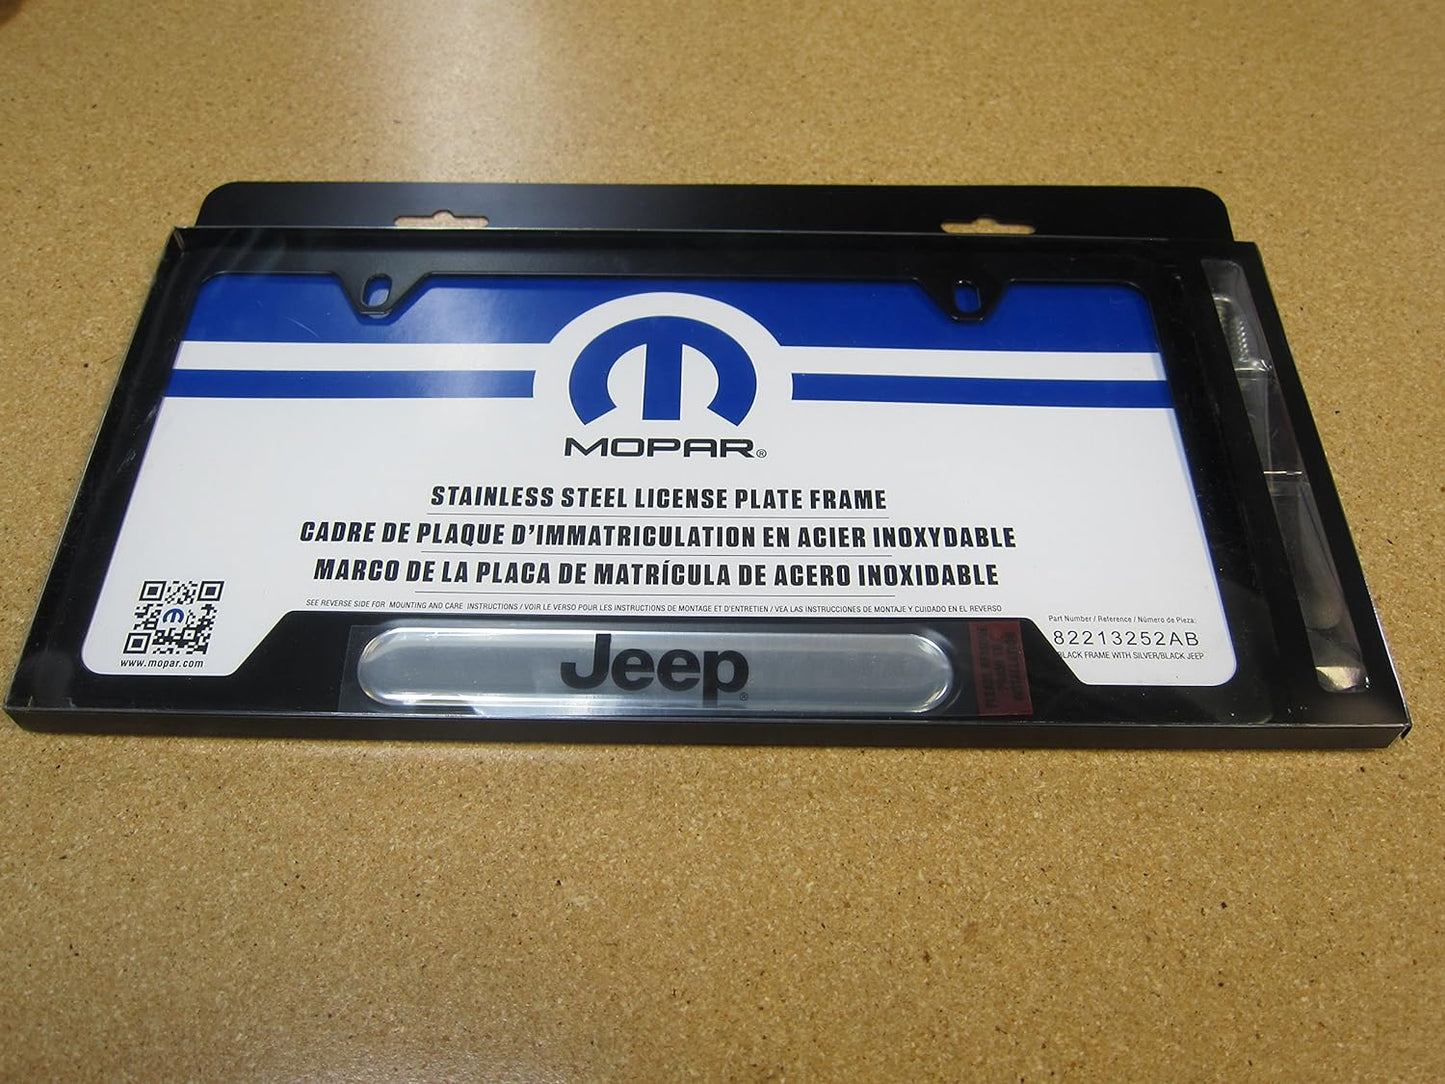 Mopar License Plate Frame  82213252AB